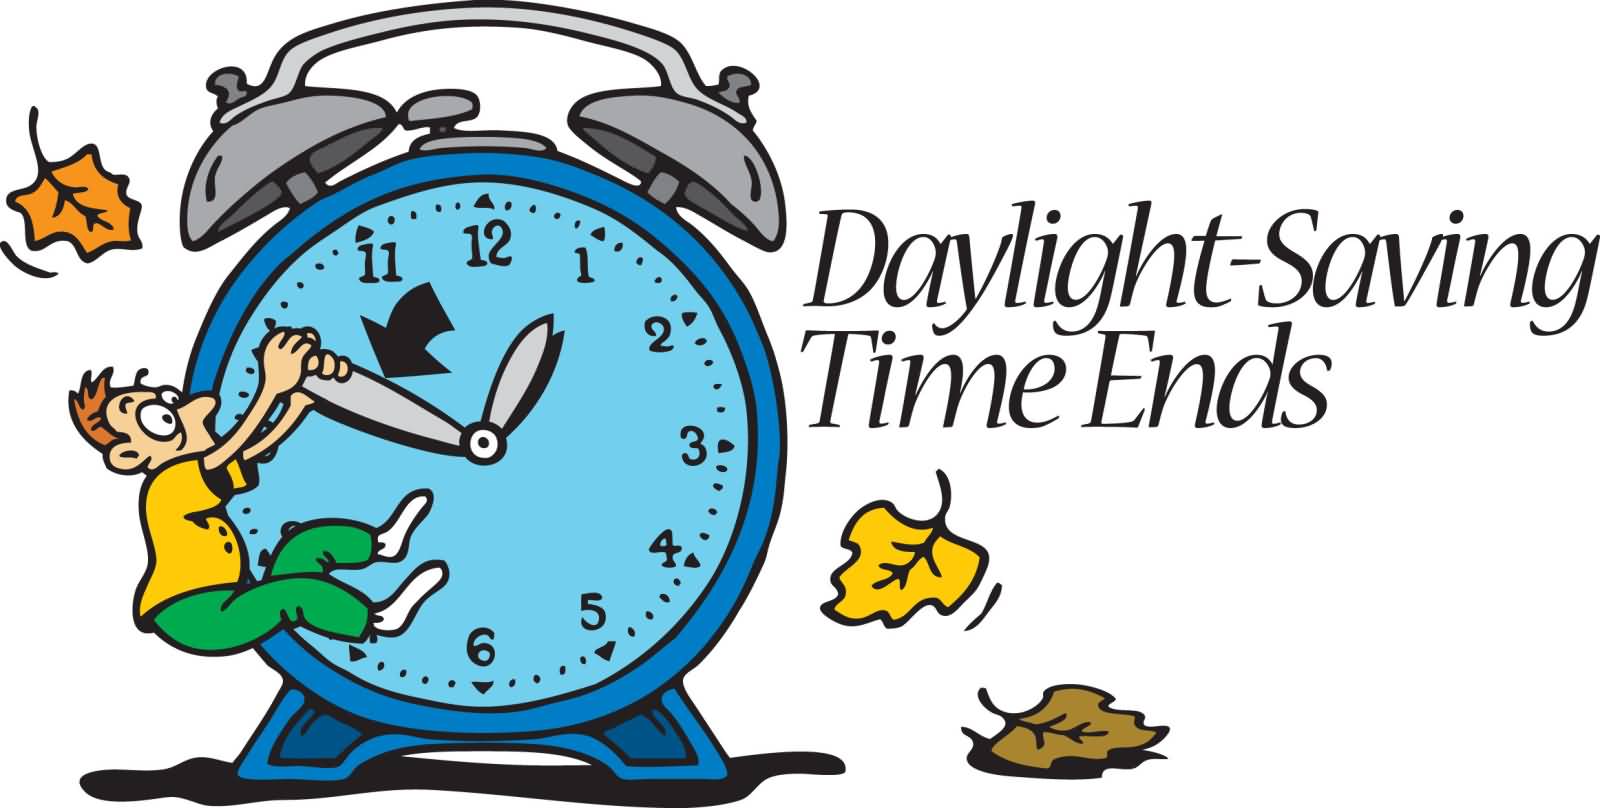 Daylight Saving Time Ends Illustration